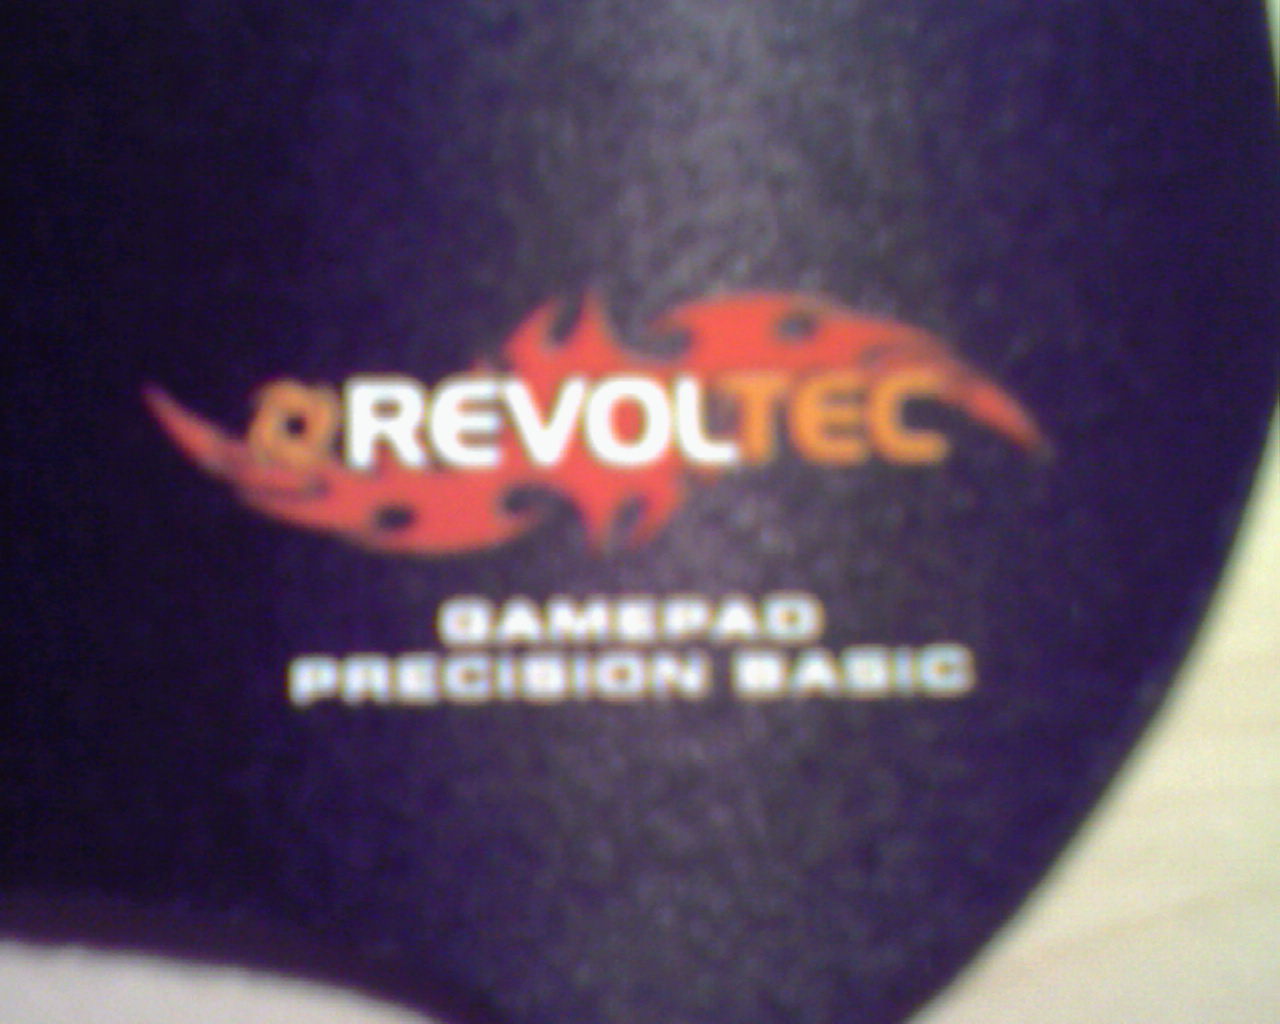  Revoltec Gamepad Precision Basic Mousepad İncelemesi